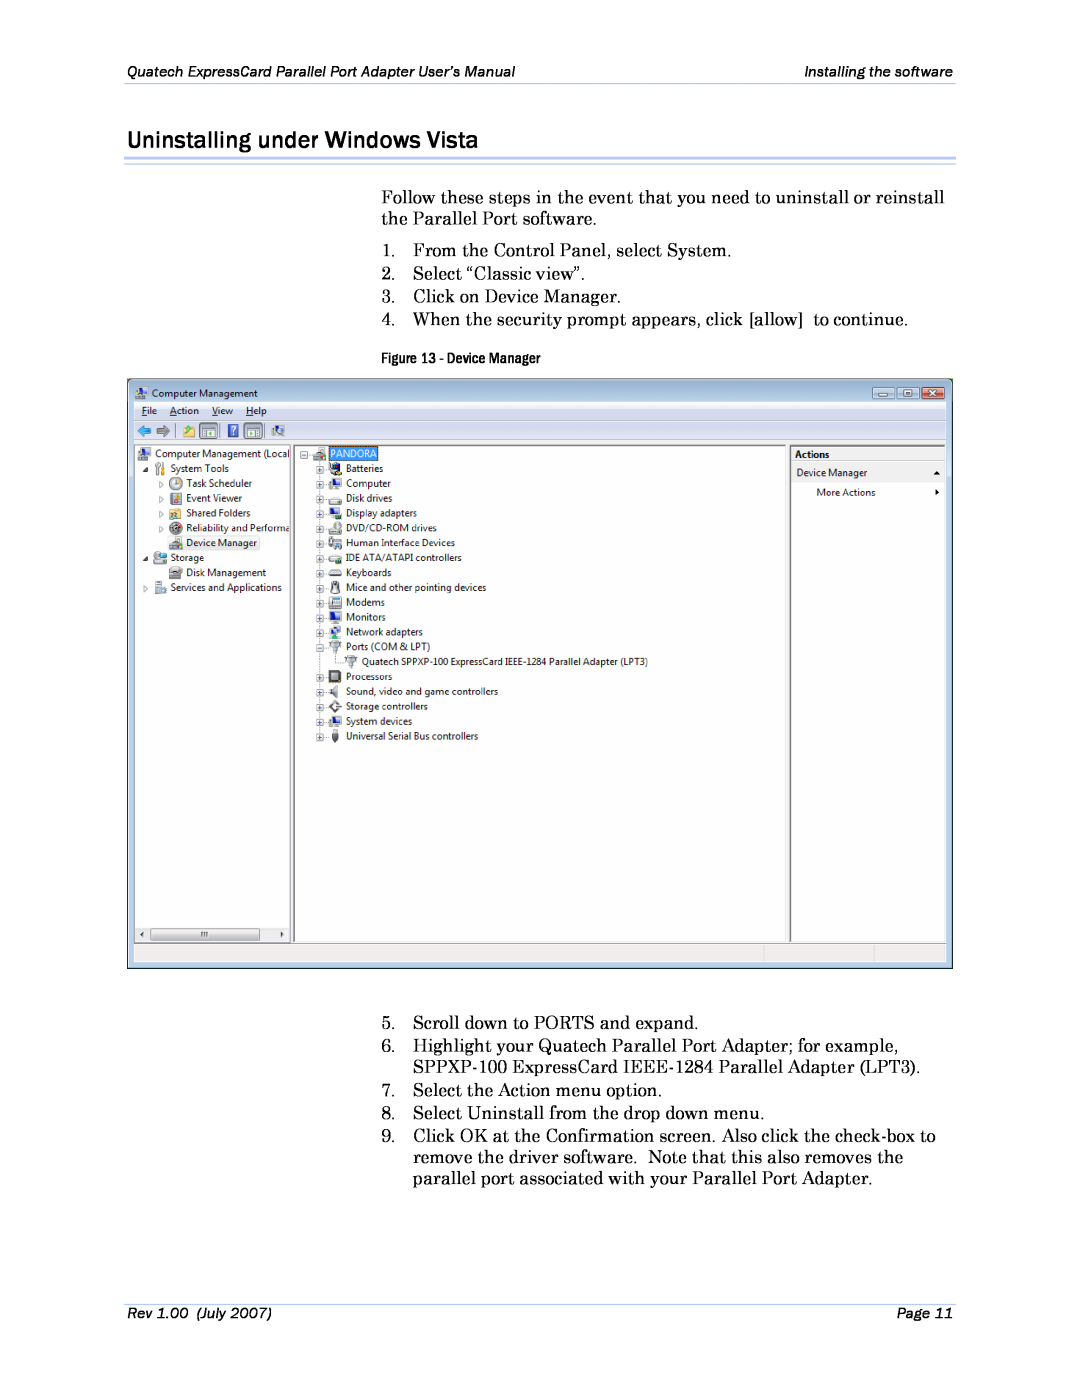 Quatech SPPXP-100 user manual Uninstalling under Windows Vista, Device Manager 